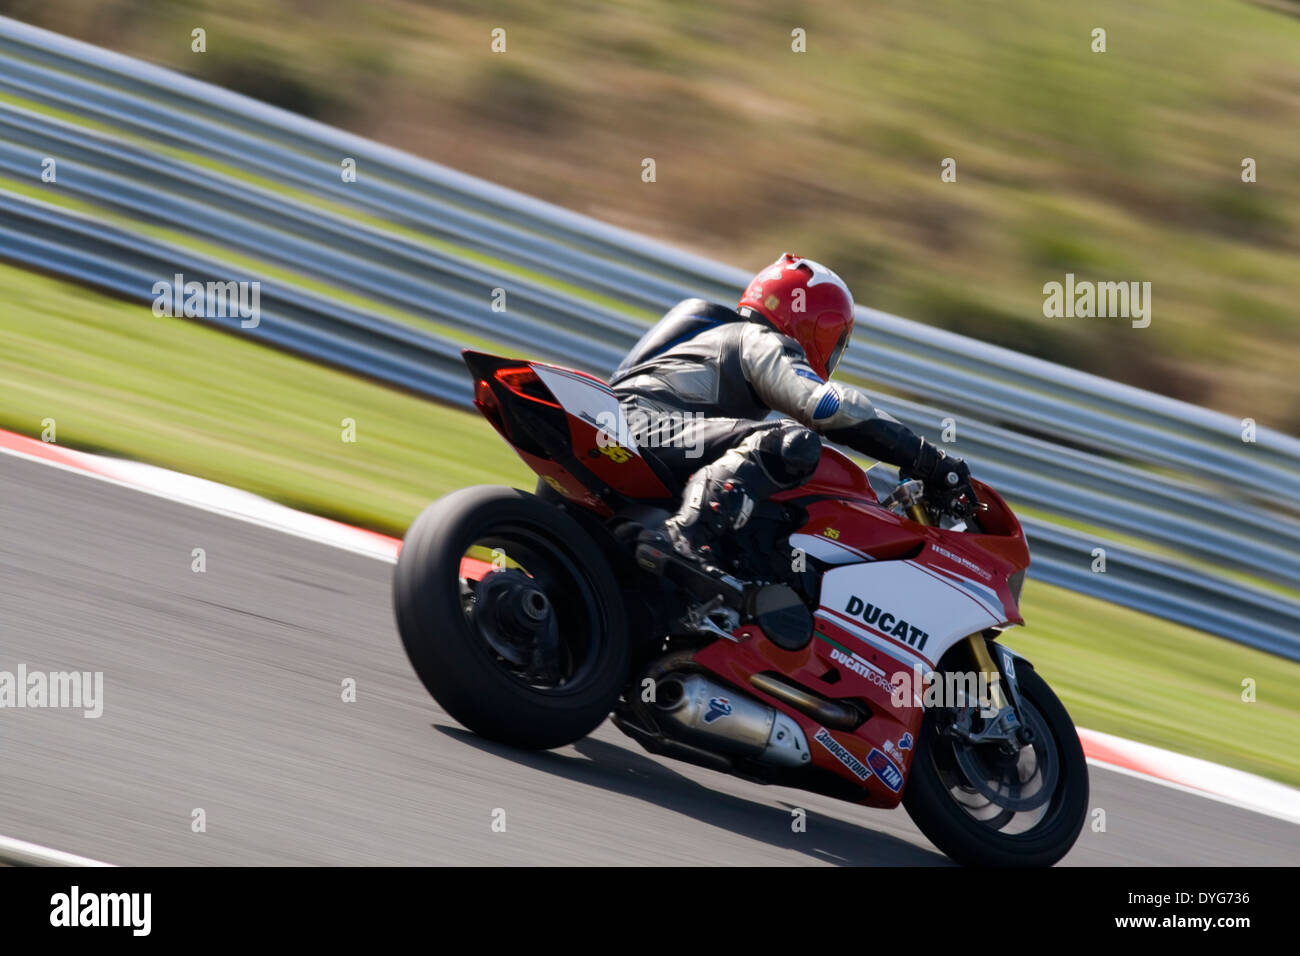 Ducati Superbike Aussaat um Oulton Park Rennstrecke. Stockfoto